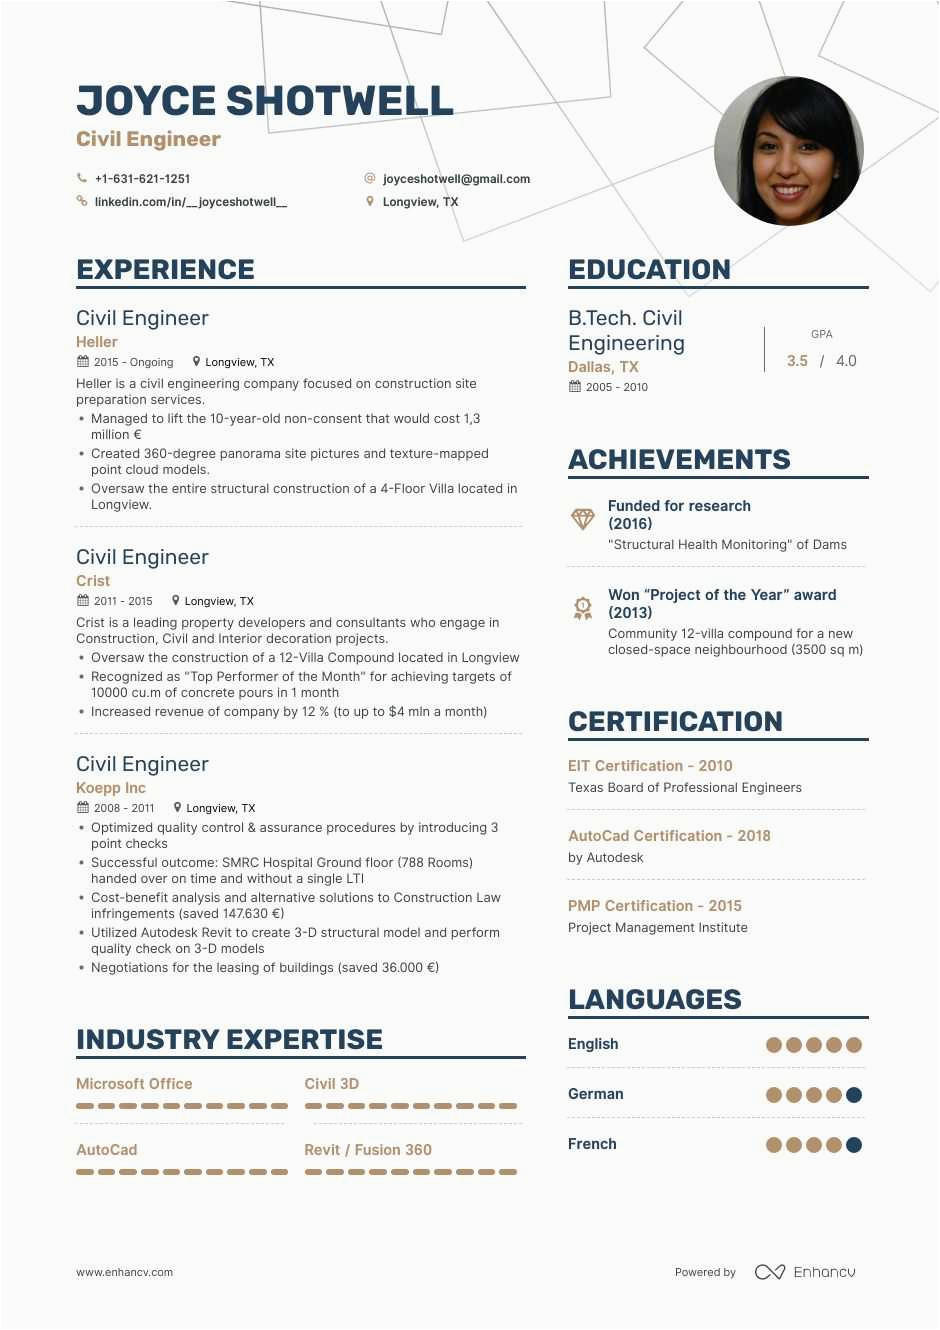 Sample Resume for Civil Engineer Experienced Civil Engineer Resume Examples Guide & Pro Tips